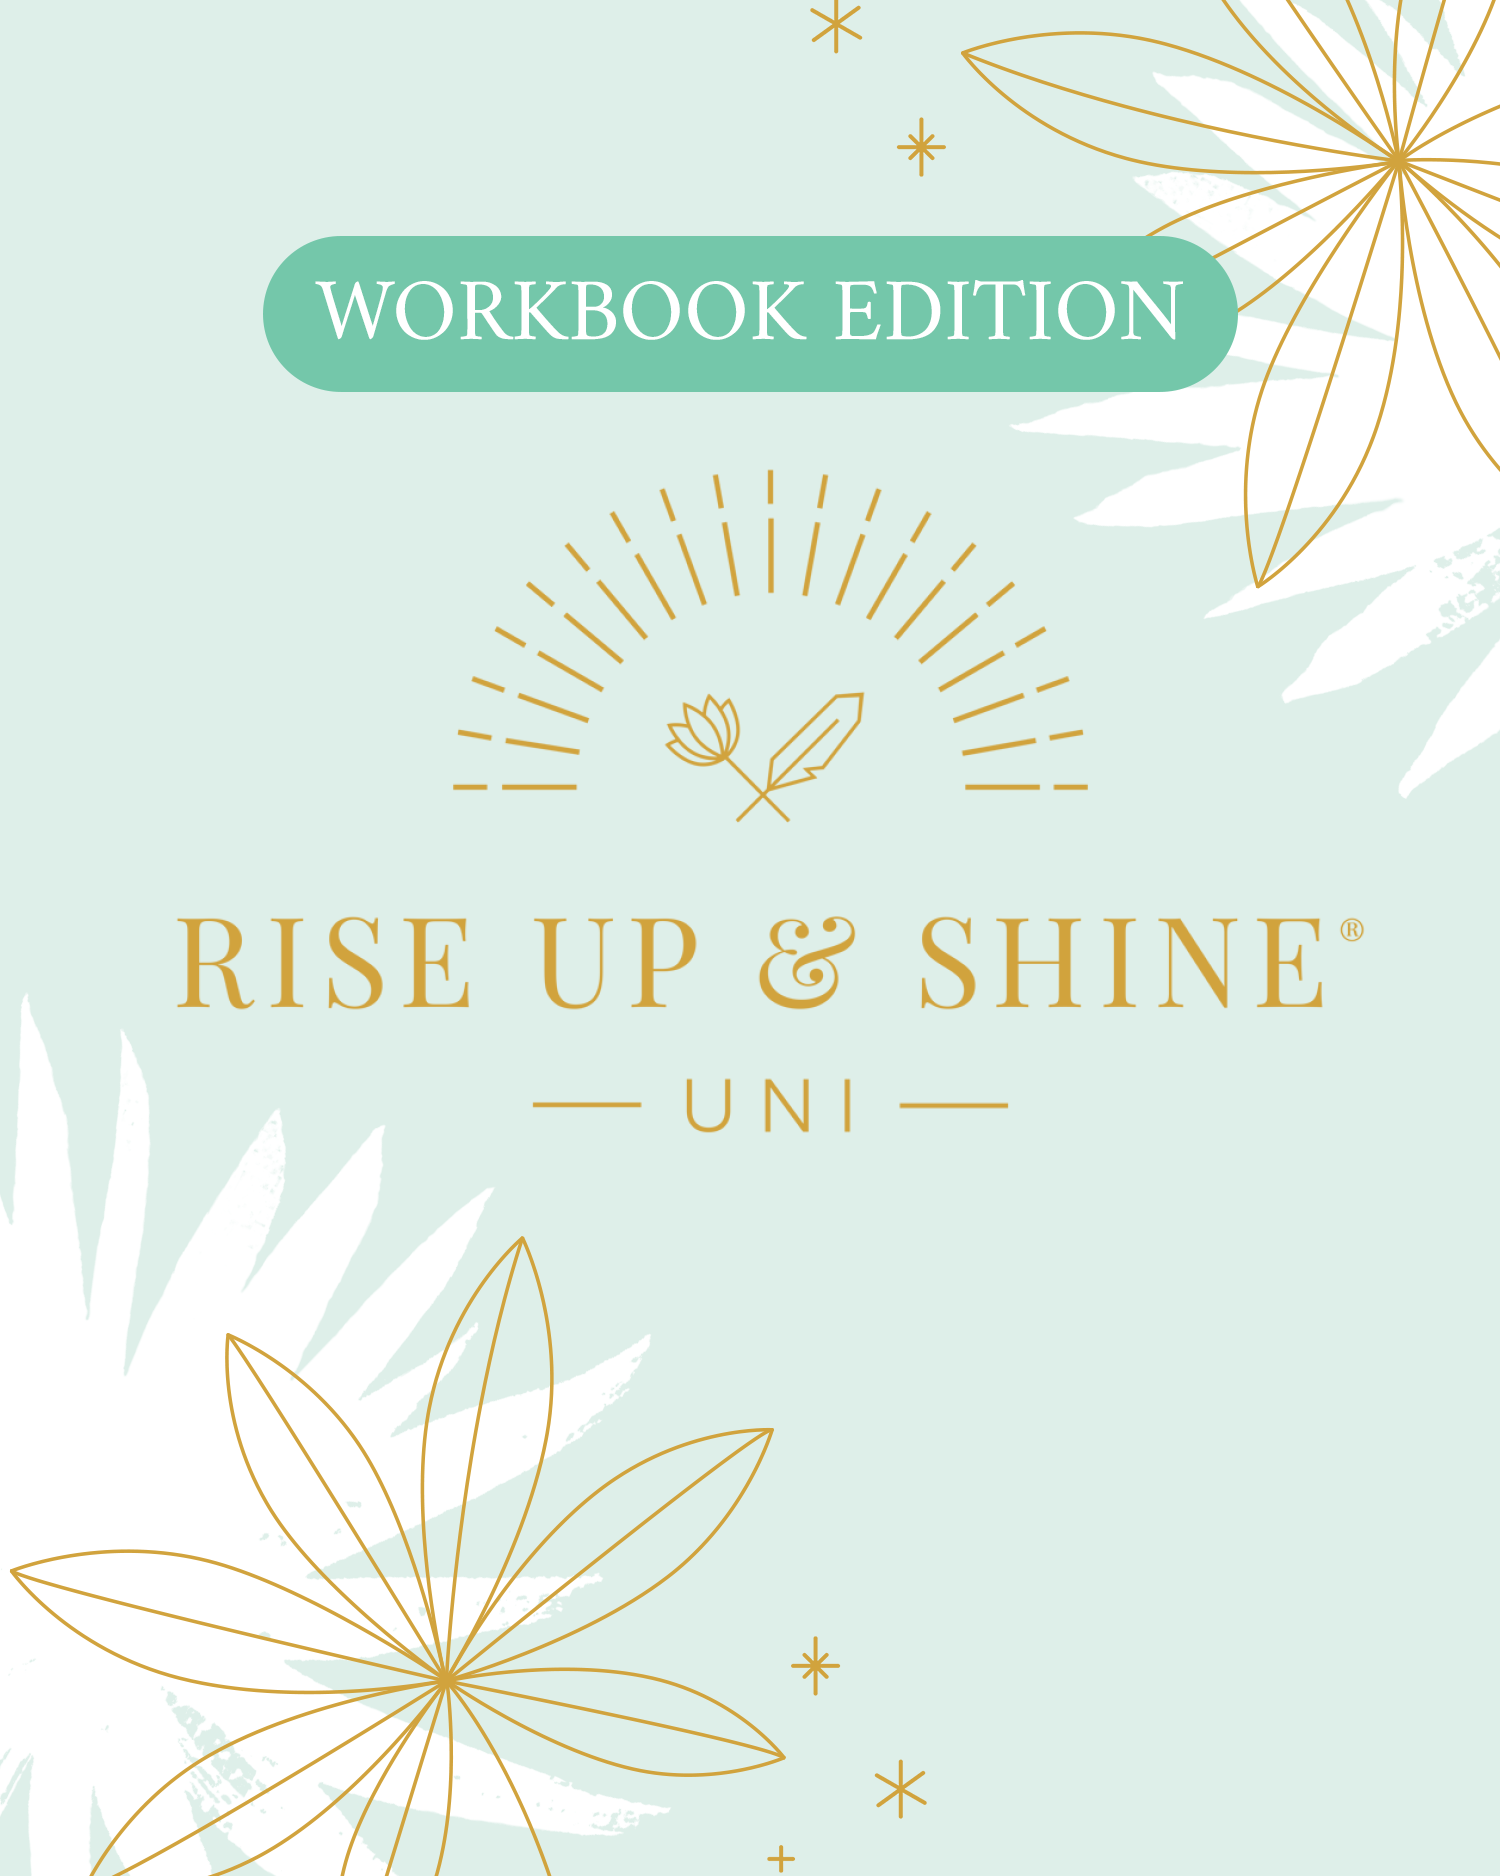 RISE UP & SHINE UNI® Workbook 2021